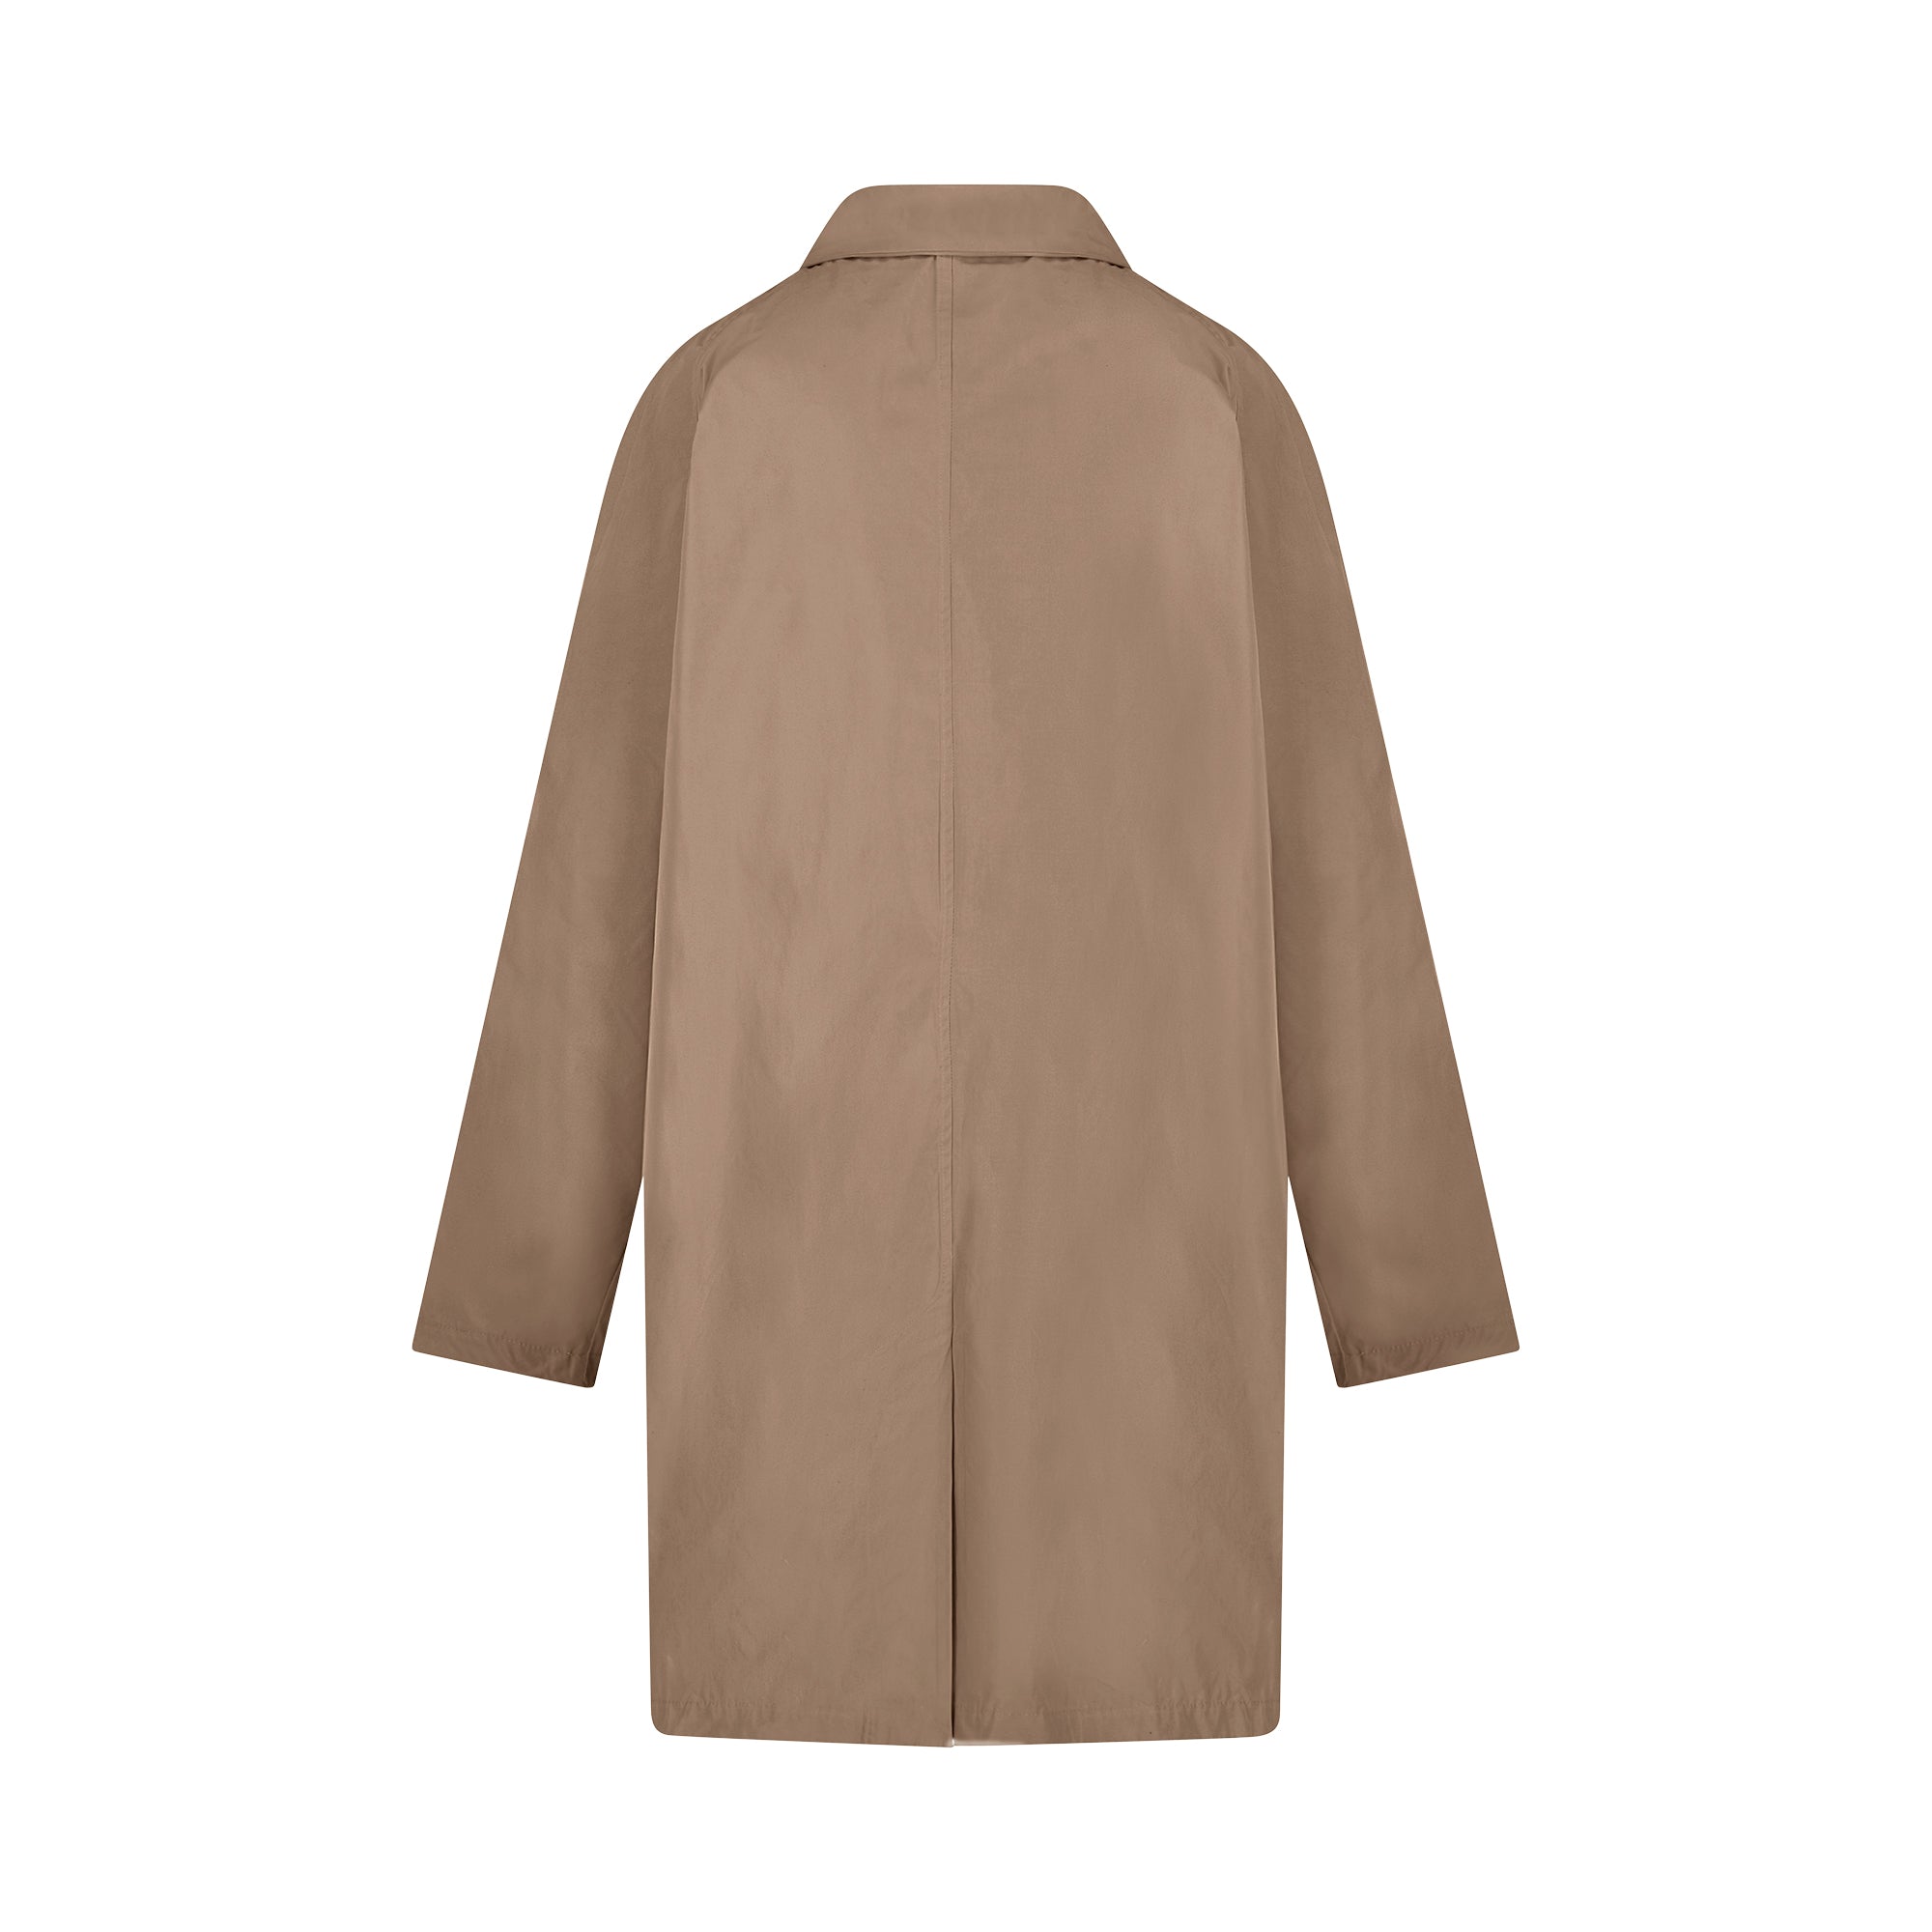 Strato men's raincoat - sand color - back view